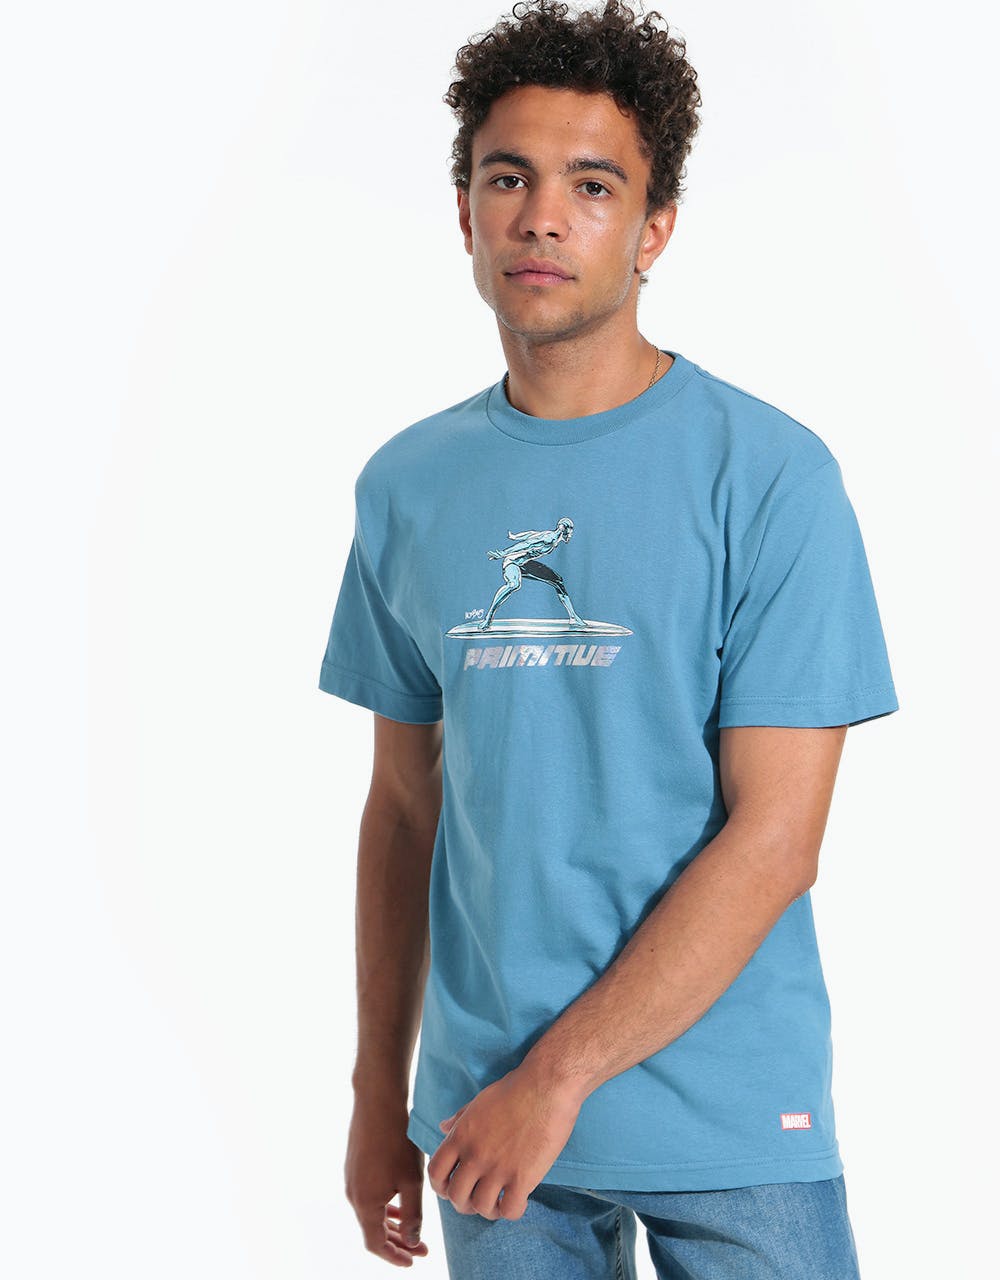 Primitive x Moebius Silver Surfer T-Shirt - Slate – Route One